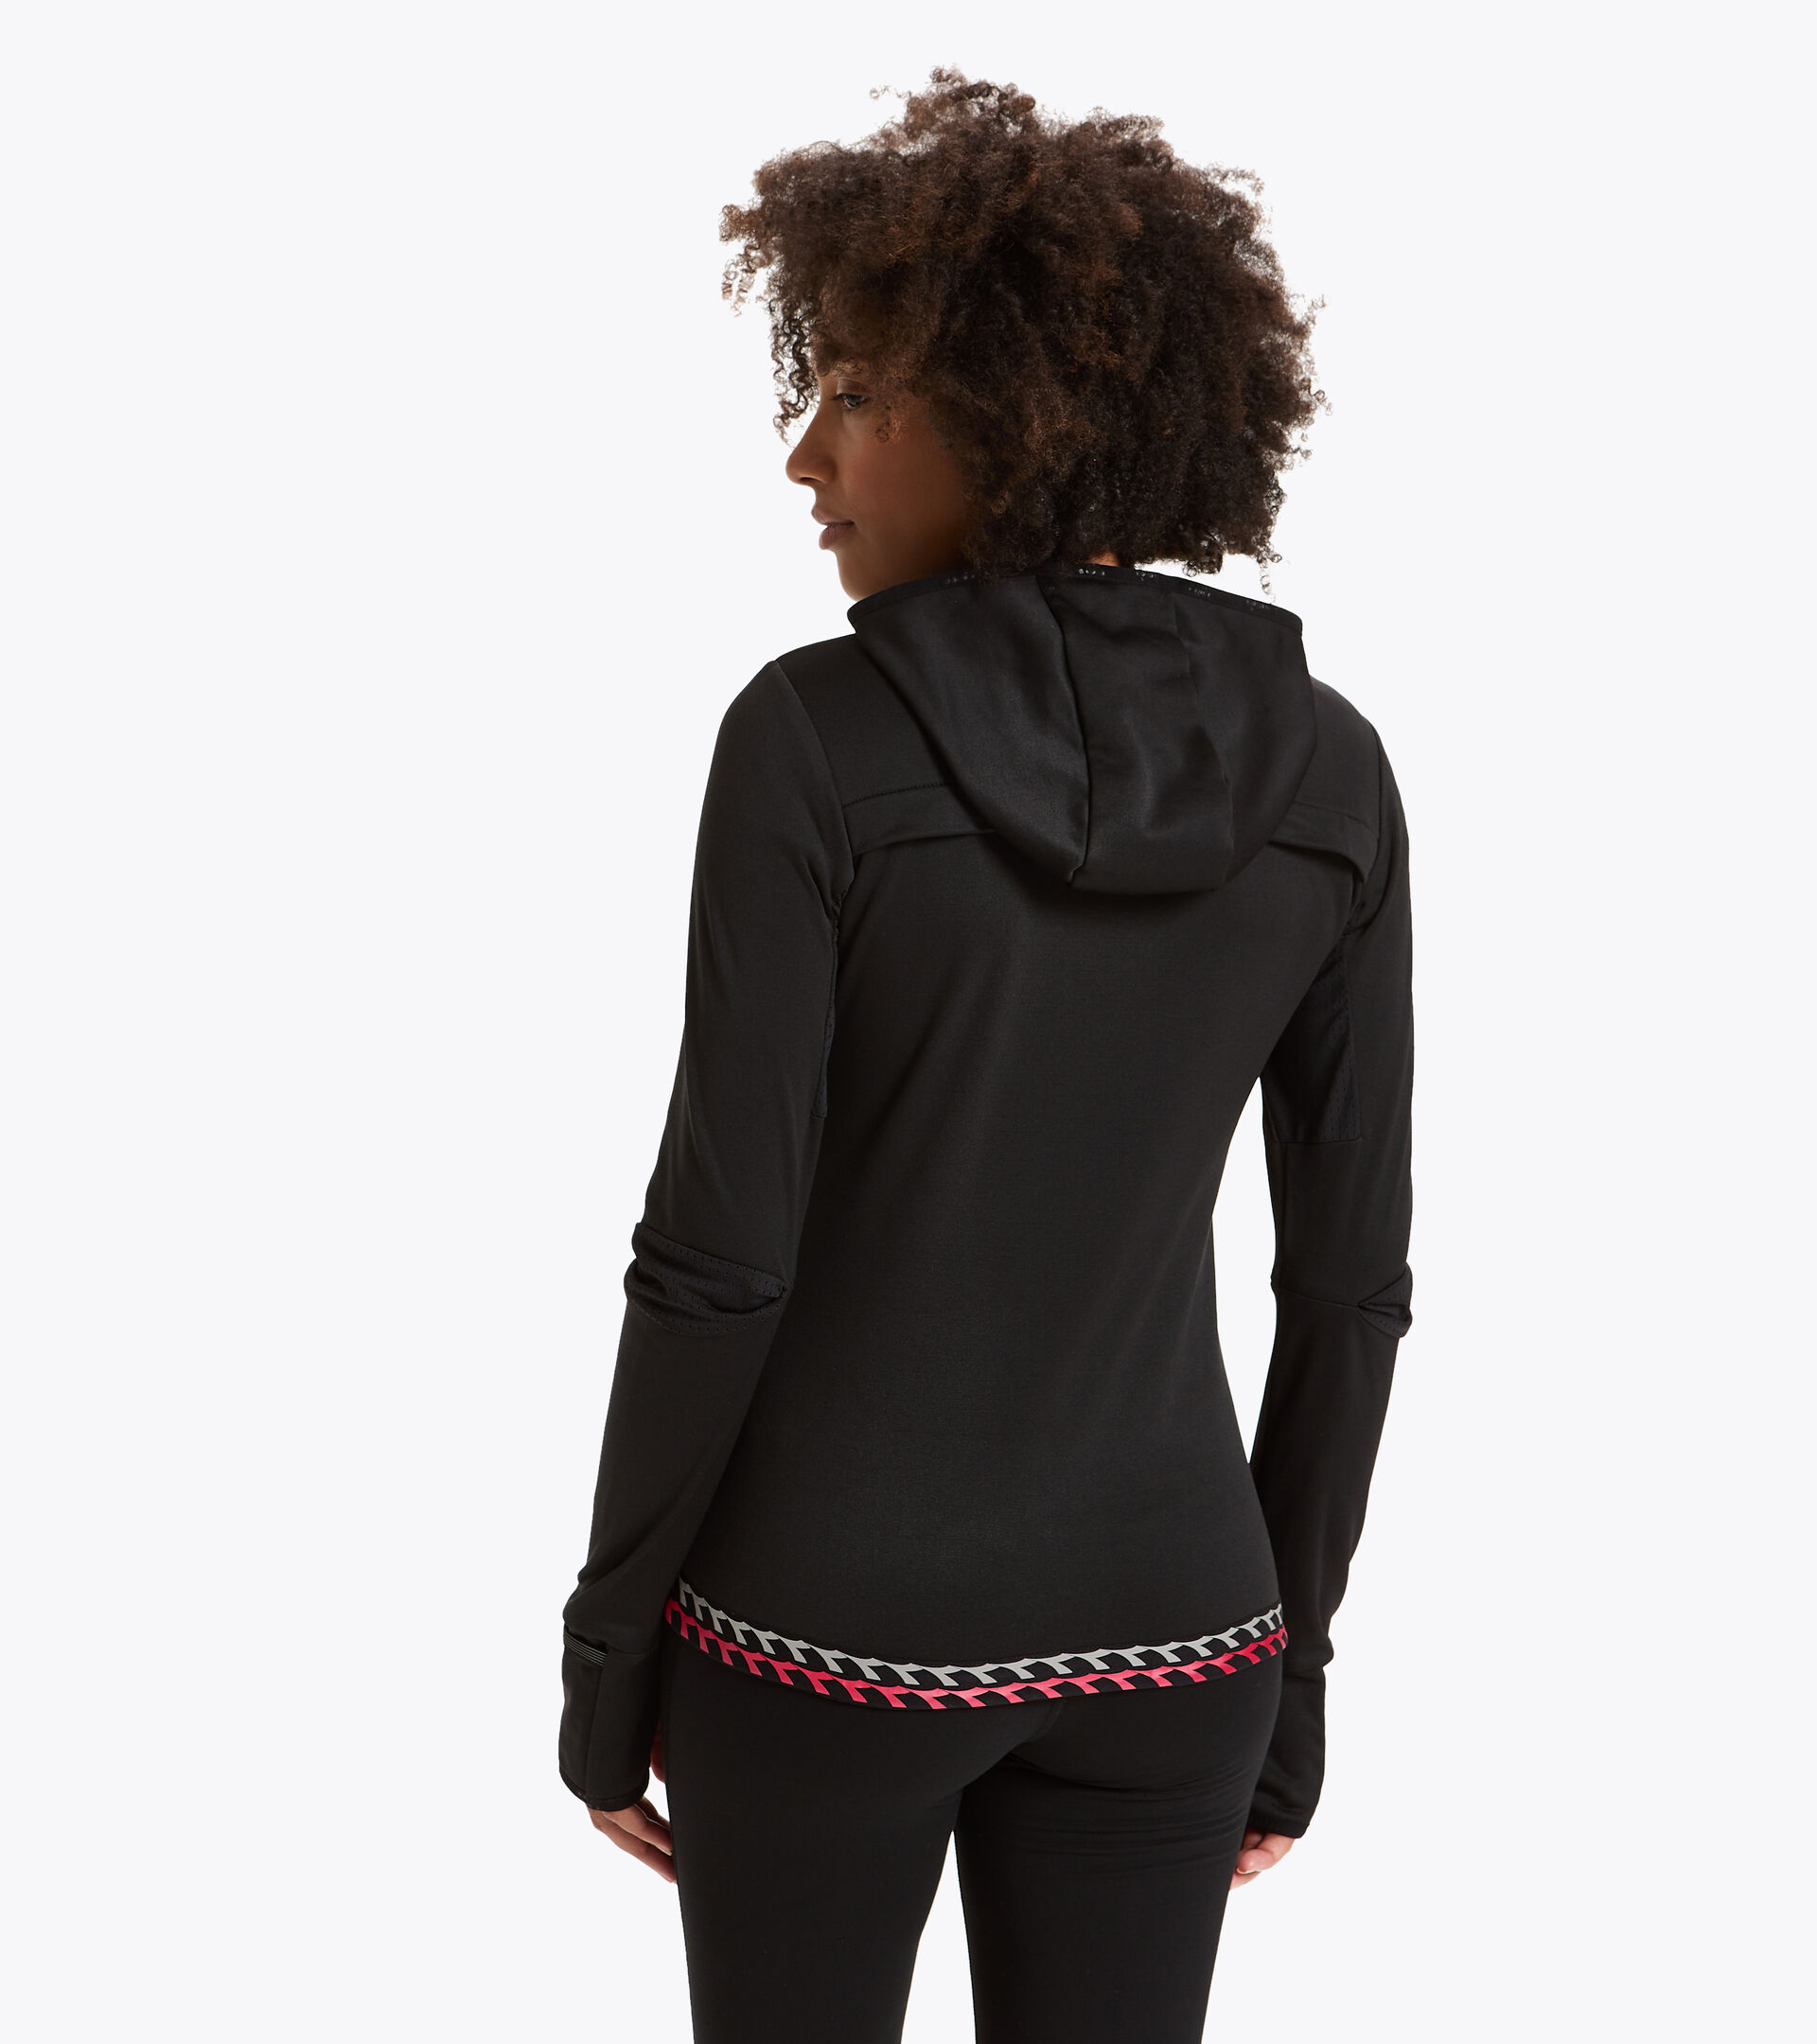 Winter hooded running sweatshirt - Women L. HD WARM UP WINTER SWEAT BLACK - Diadora